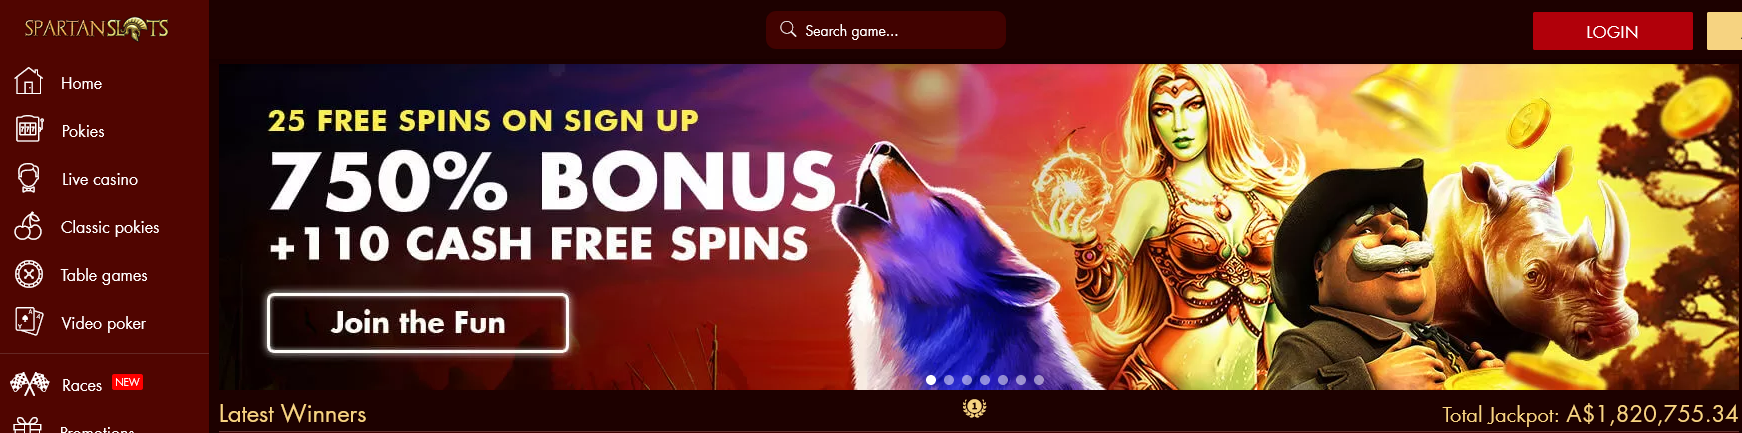 Spartan Slots 25 Free Spins on Sign Up, 750% Bonus + 110 Cash Free Spins